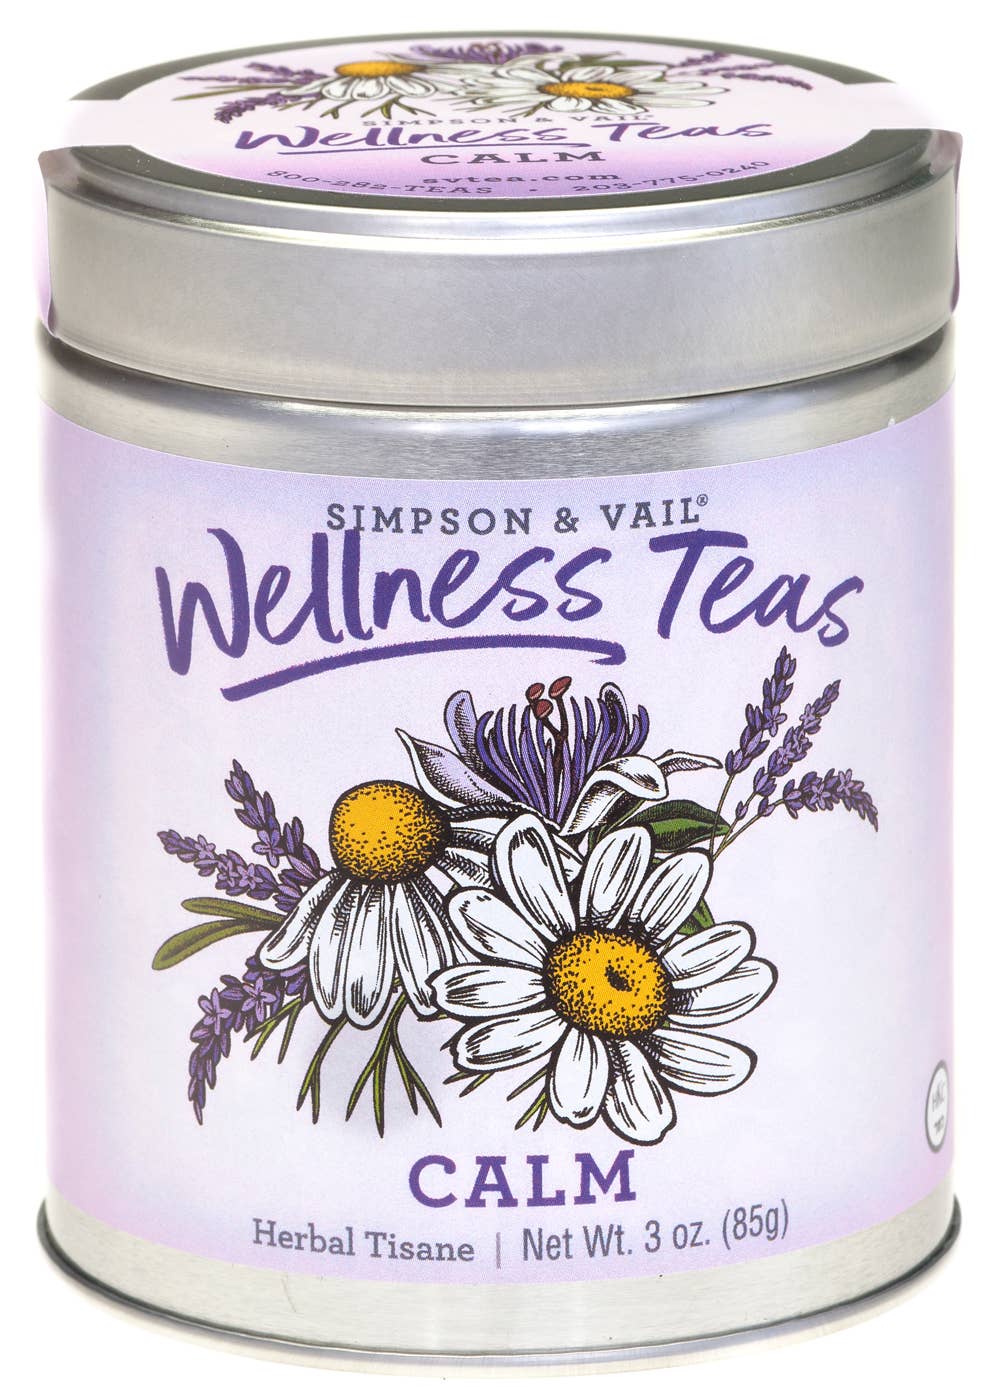 Calm Herbal Wellness Tea - 4oz Tin